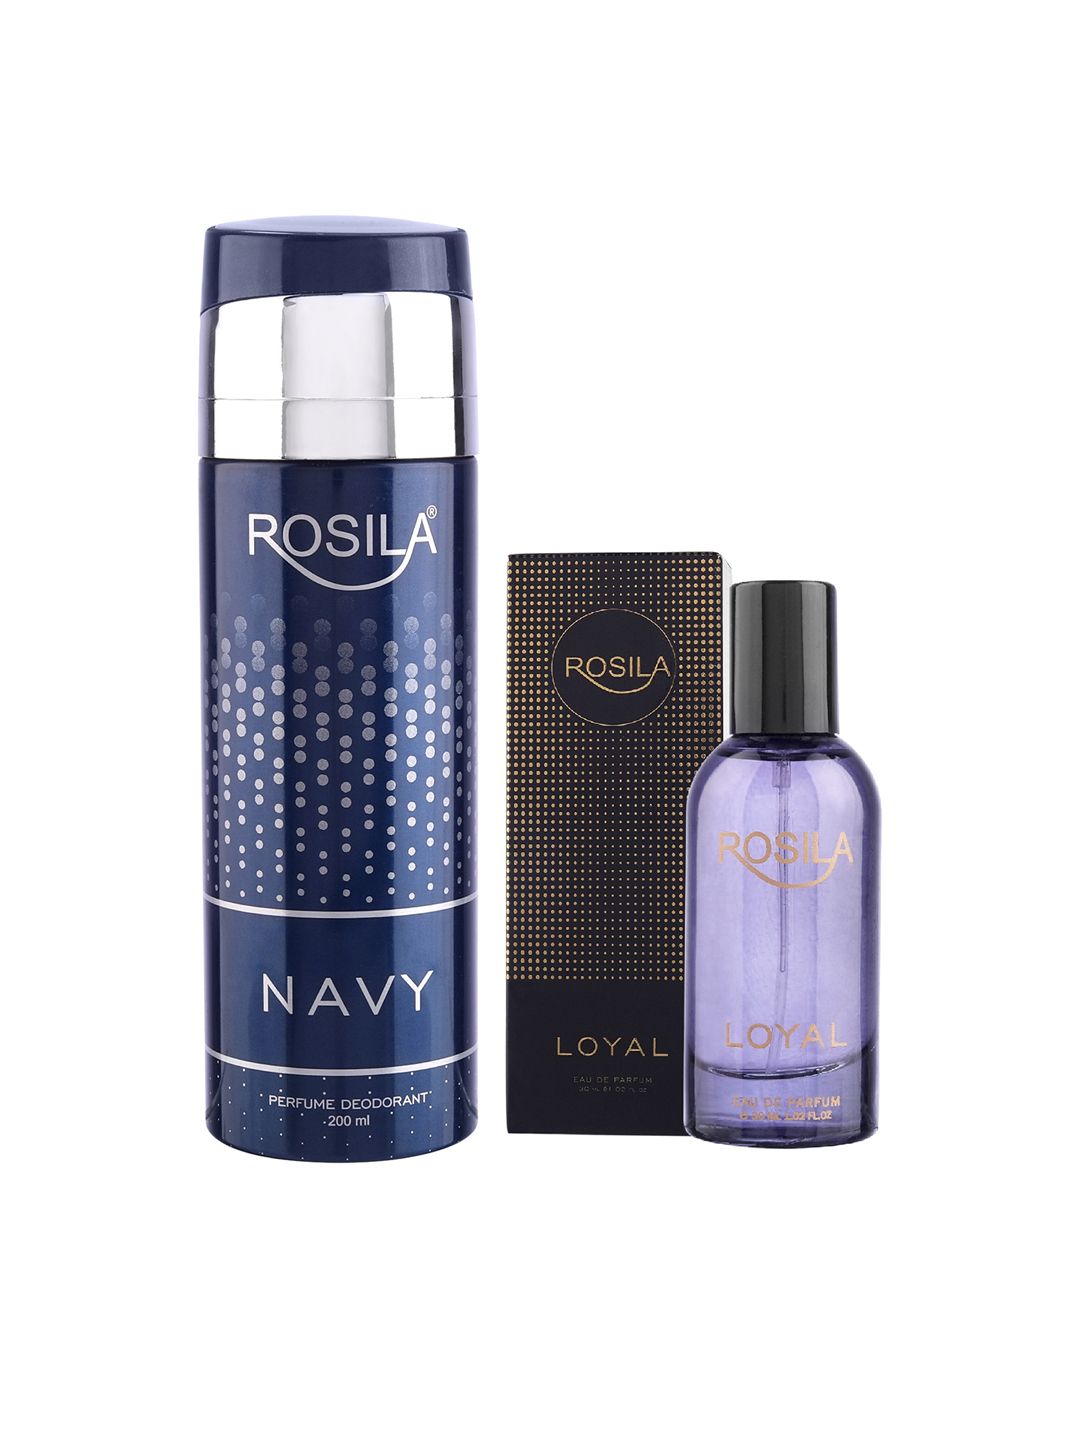 ROSILA Set of Loyal Eau De Parfum 30 ml & Navy Deodorant 200 ml Price in India